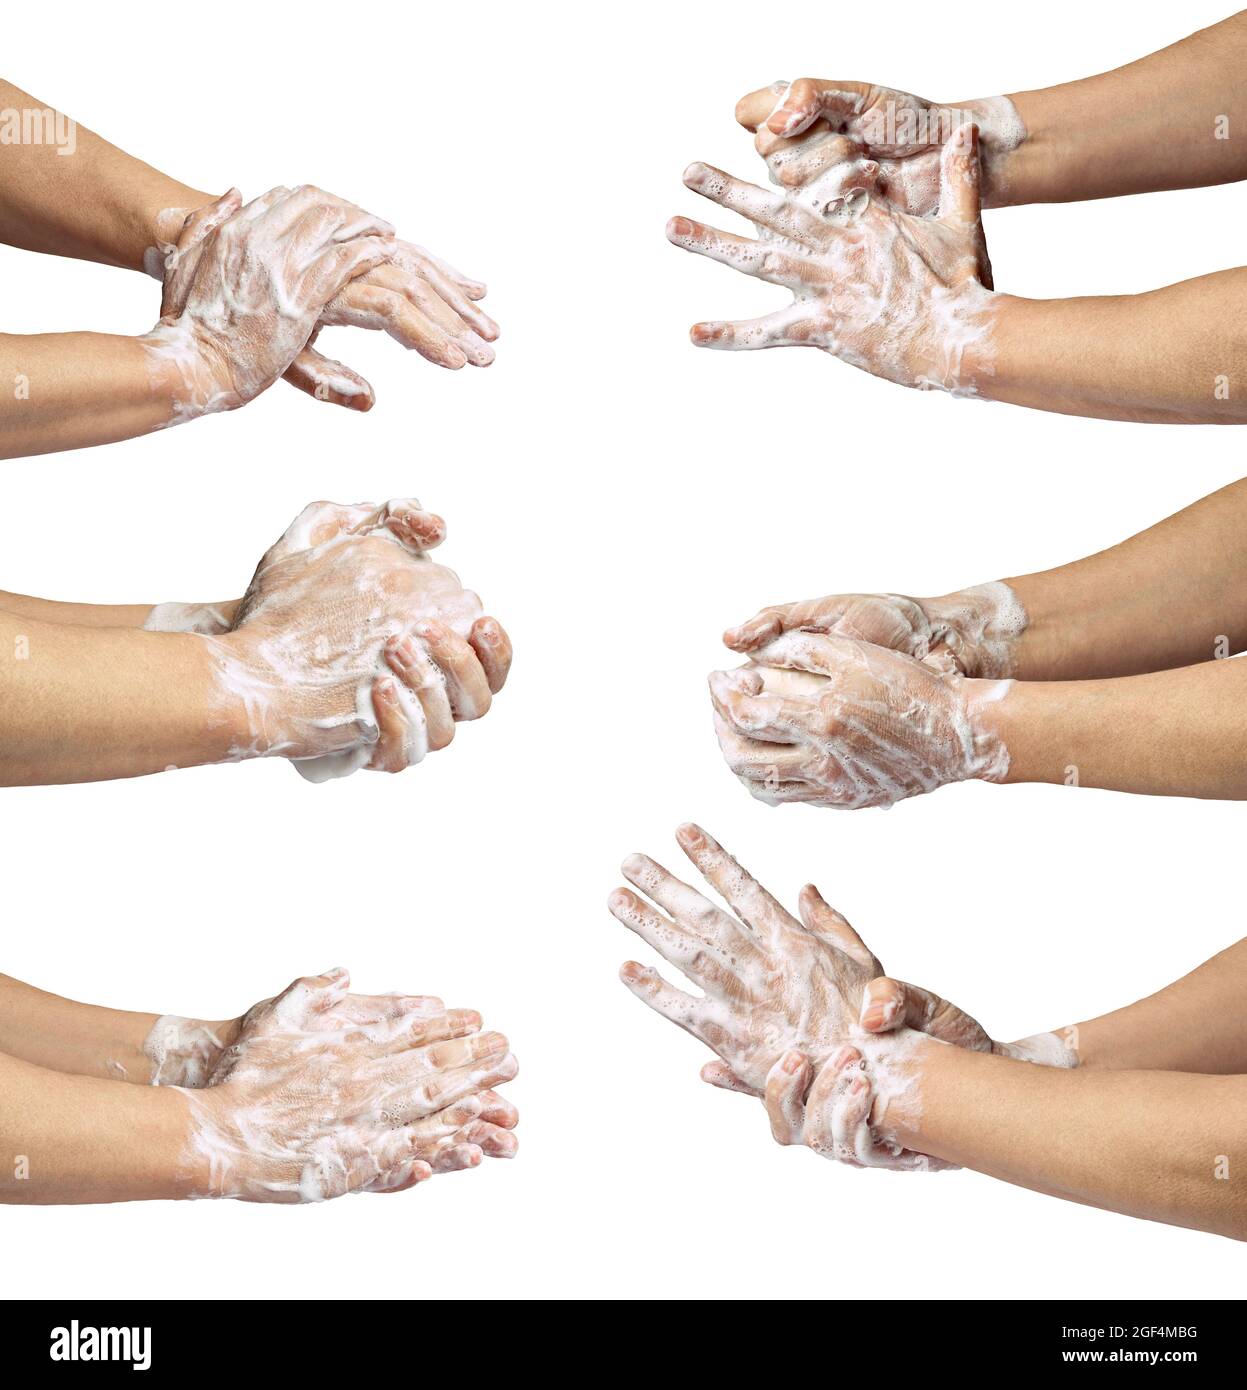 lavaggio mani sapone igiene virus pulito malattia edpidemica corona canna fuma acqua da bagno Foto Stock